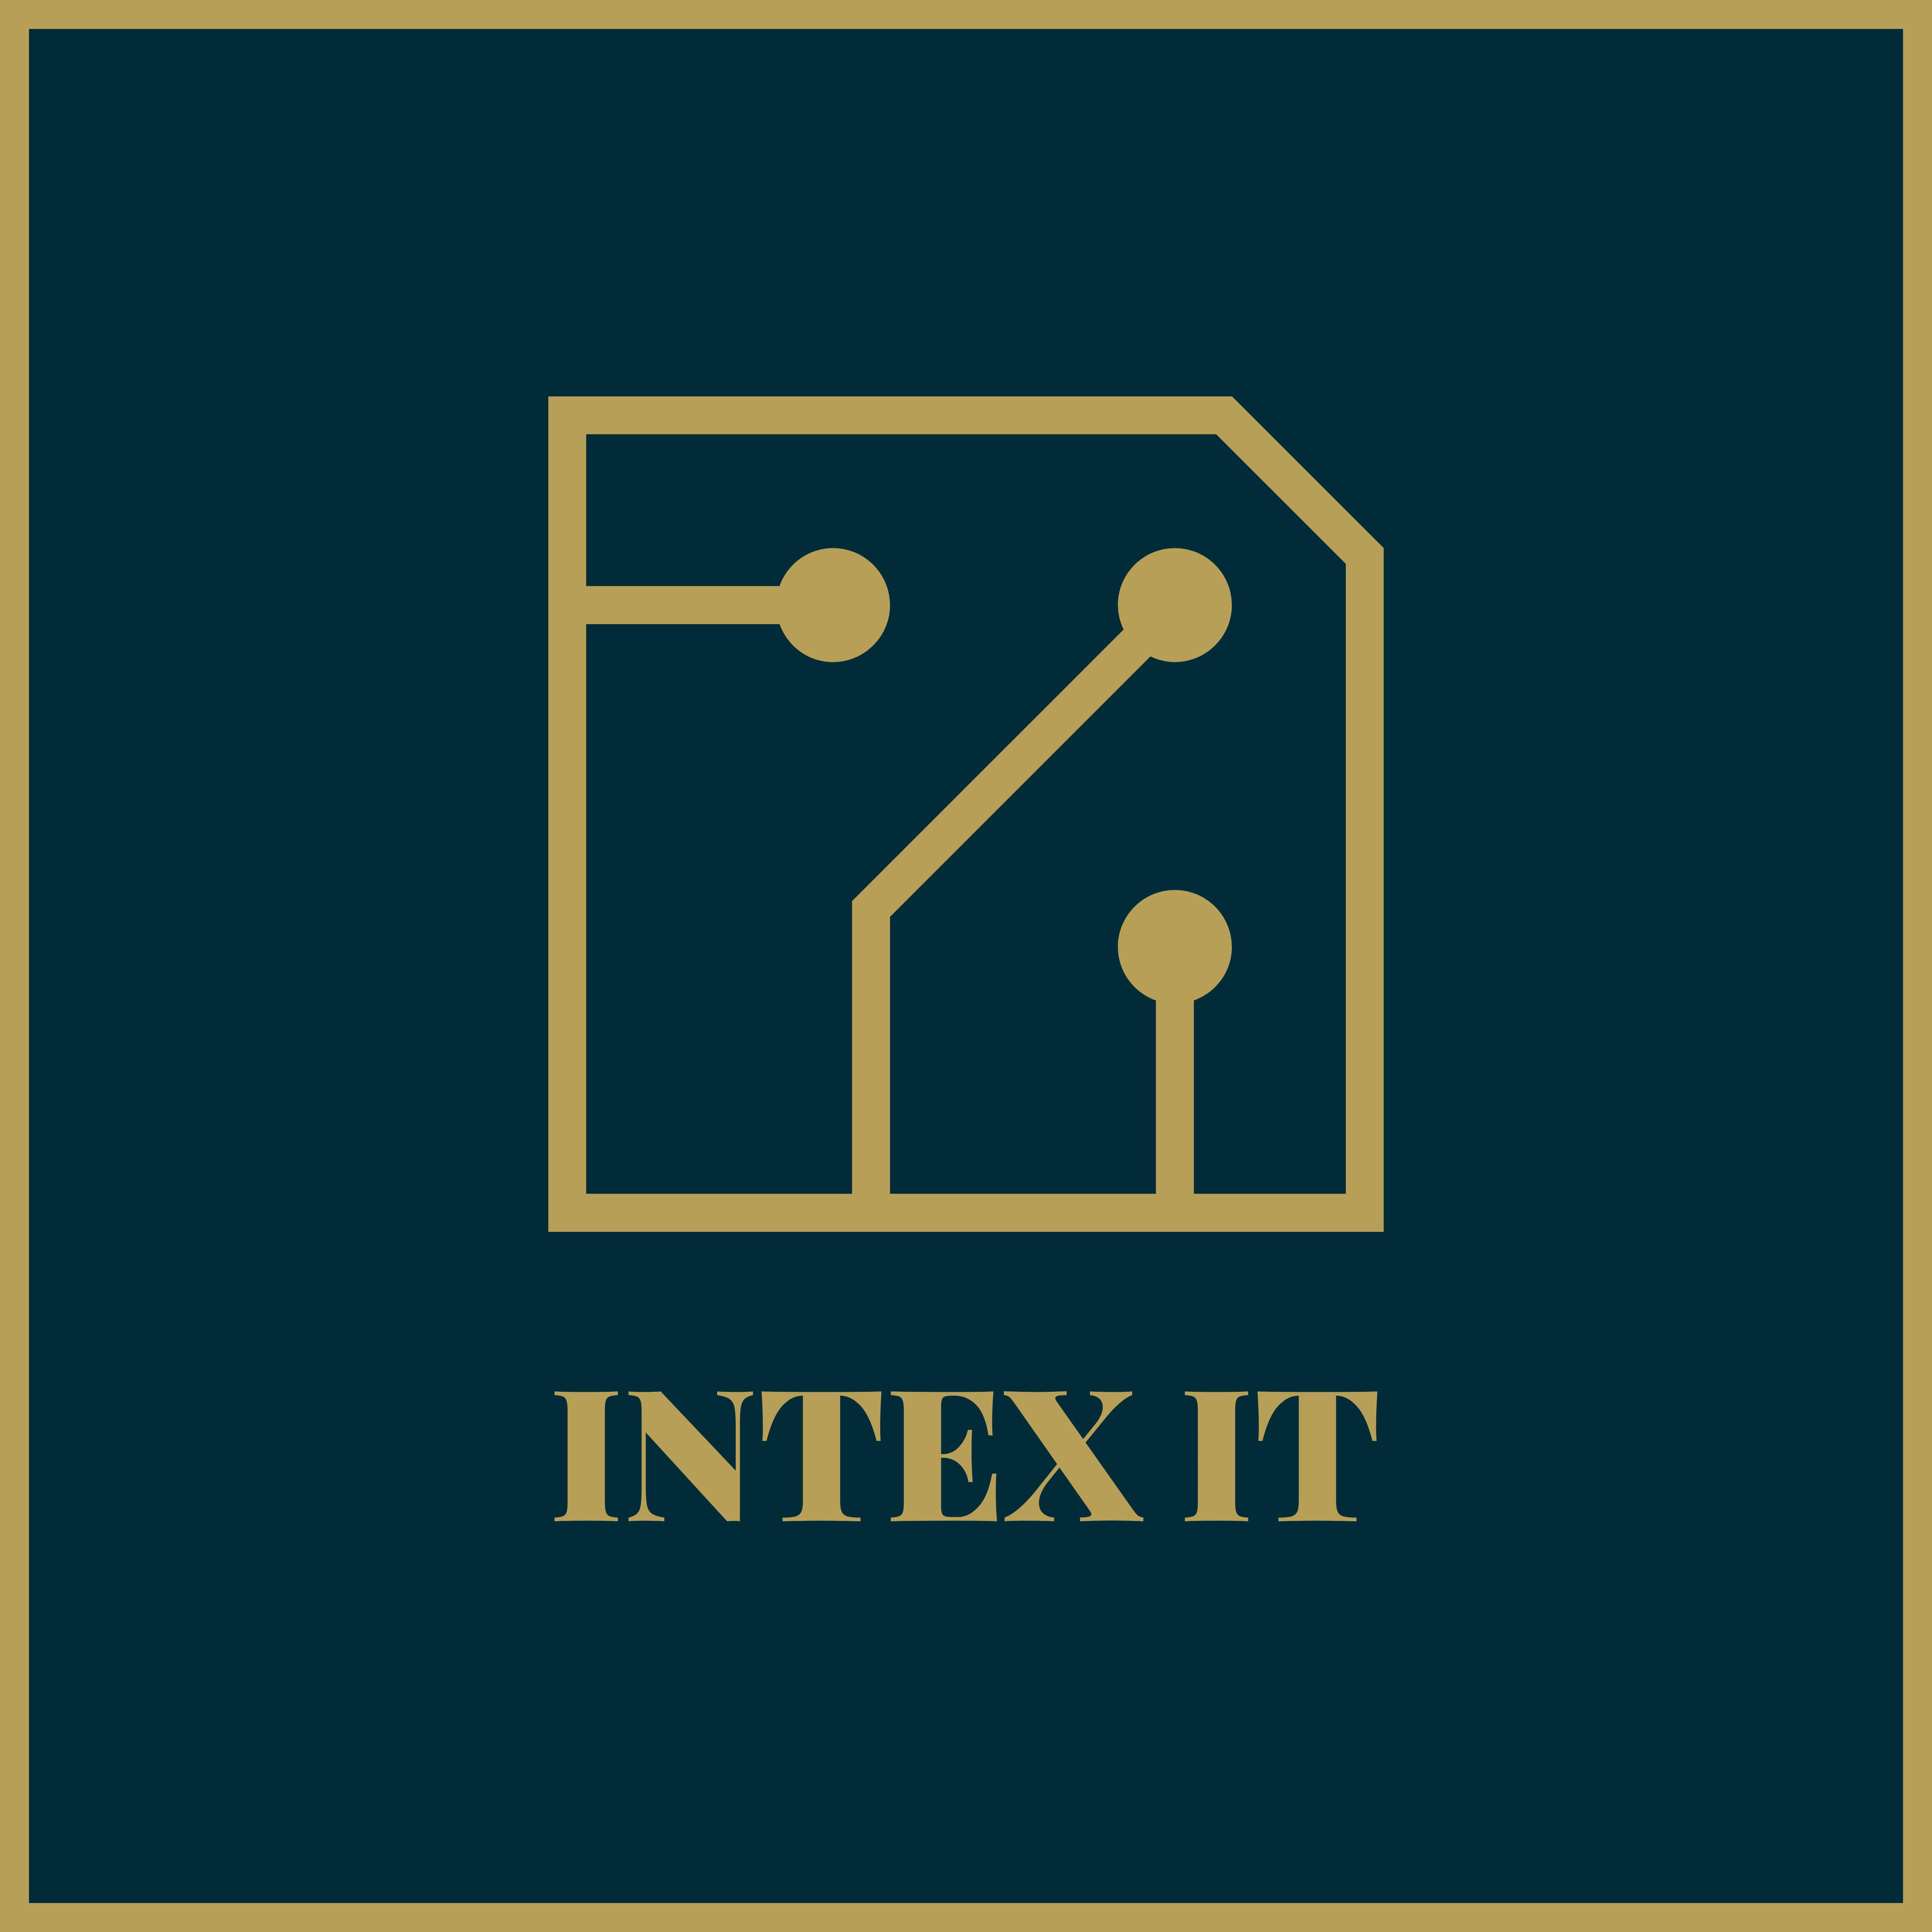 Intex IT Cyber Security Consultancy